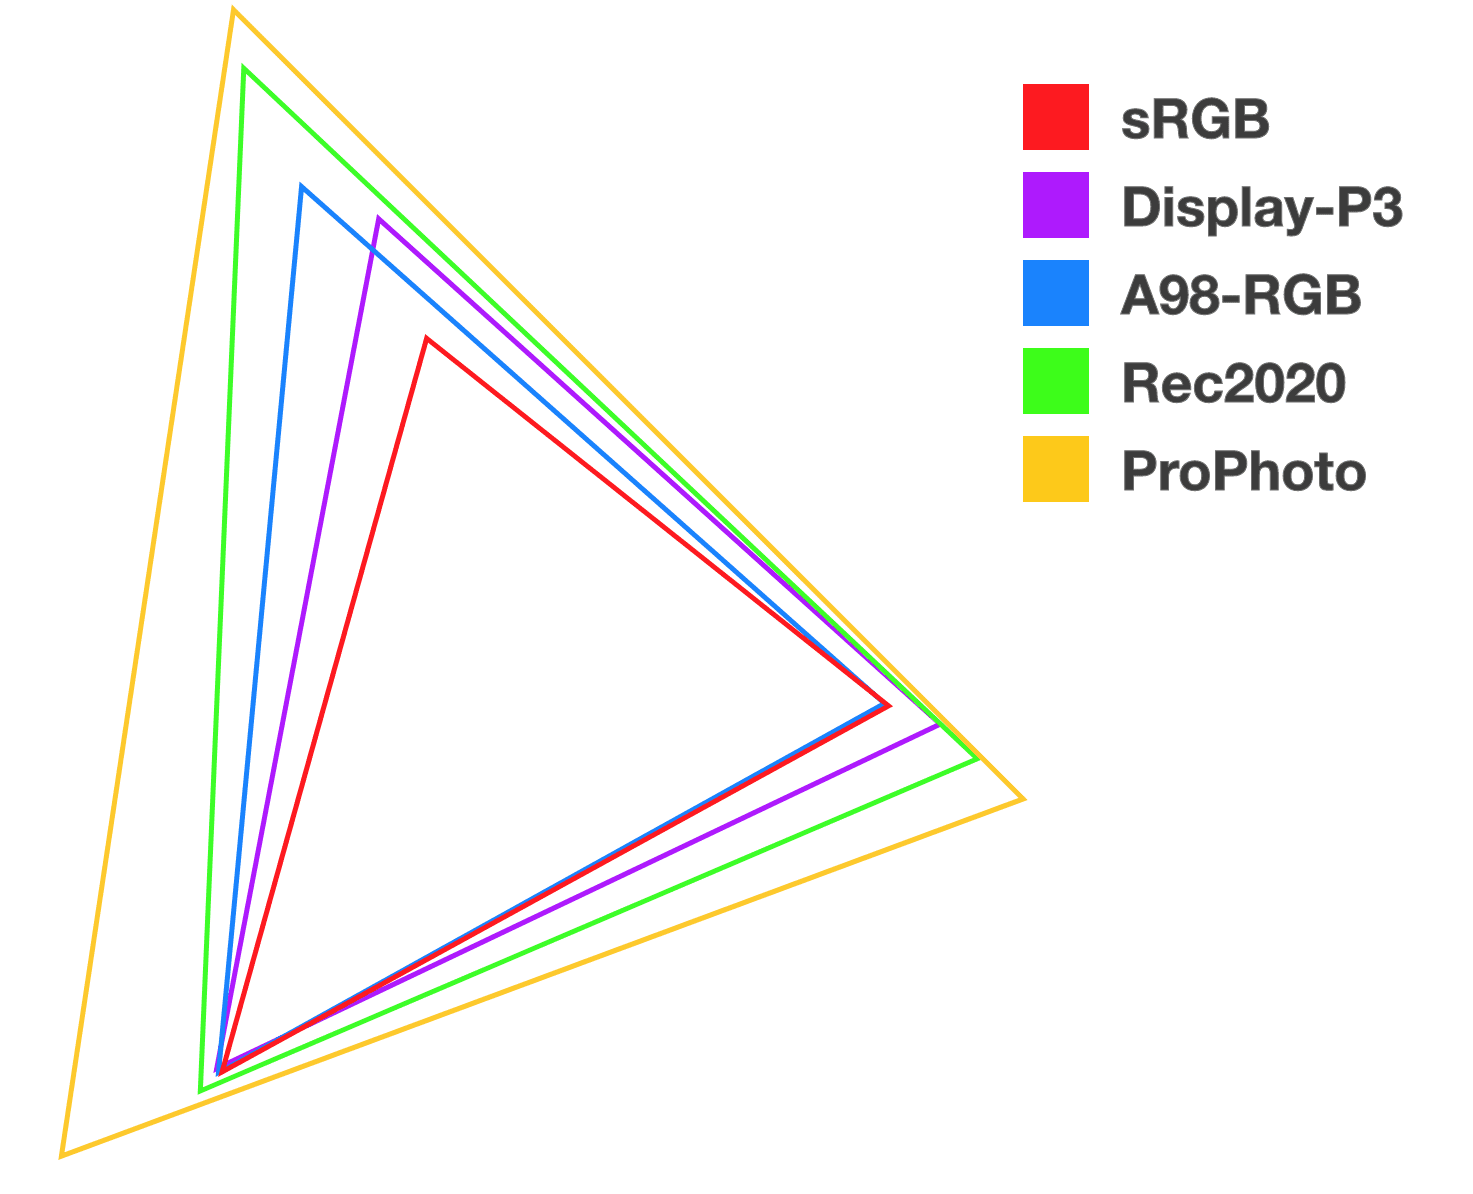 Lima segitiga bertumpuk dengan berbagai warna untuk membantu menggambarkan
  hubungan dan ukuran setiap ruang warna baru.